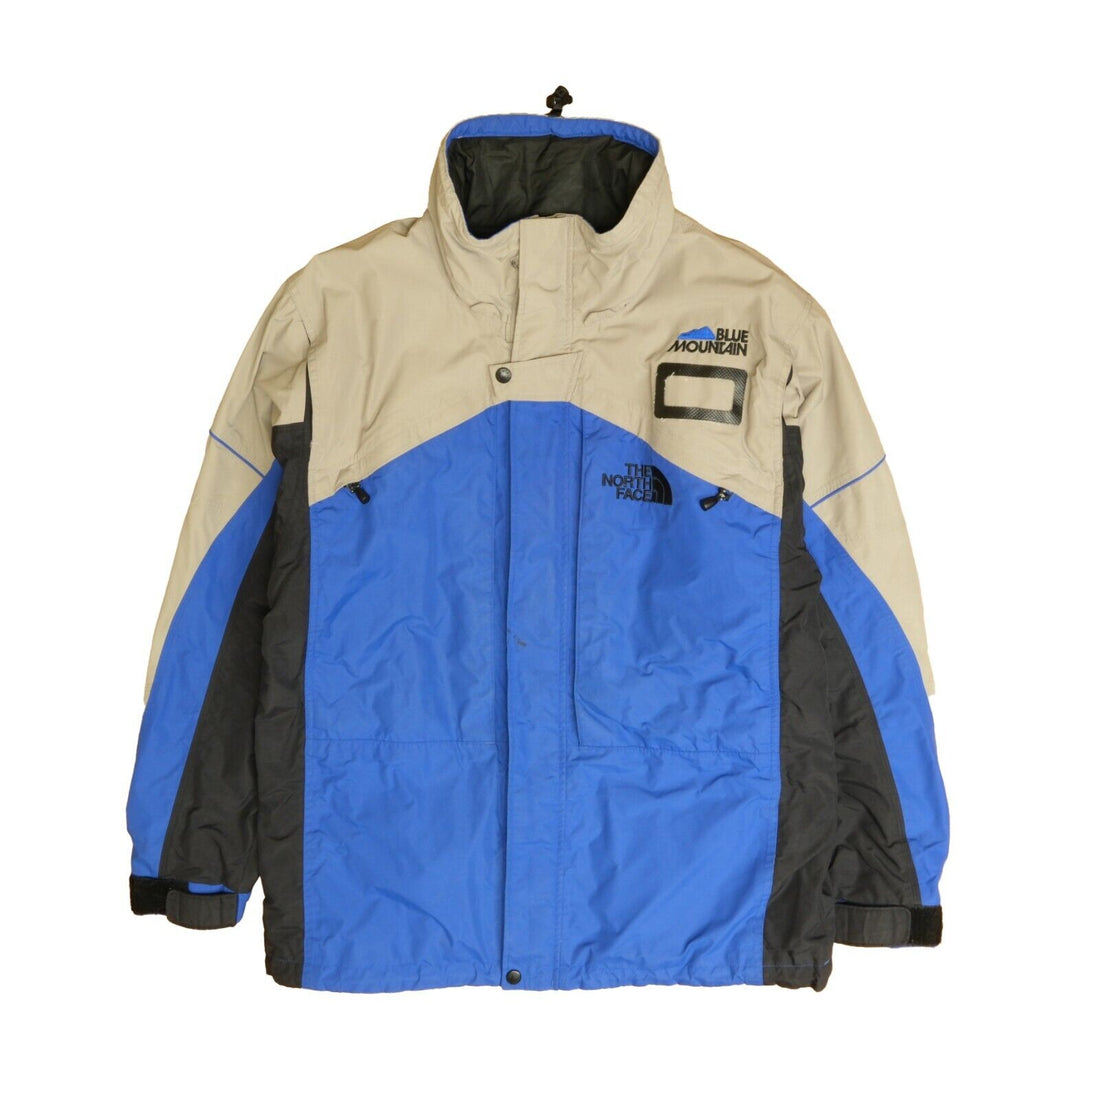 Vintage The North Face Blue Mountain Ski Jacket Size Medium Blue